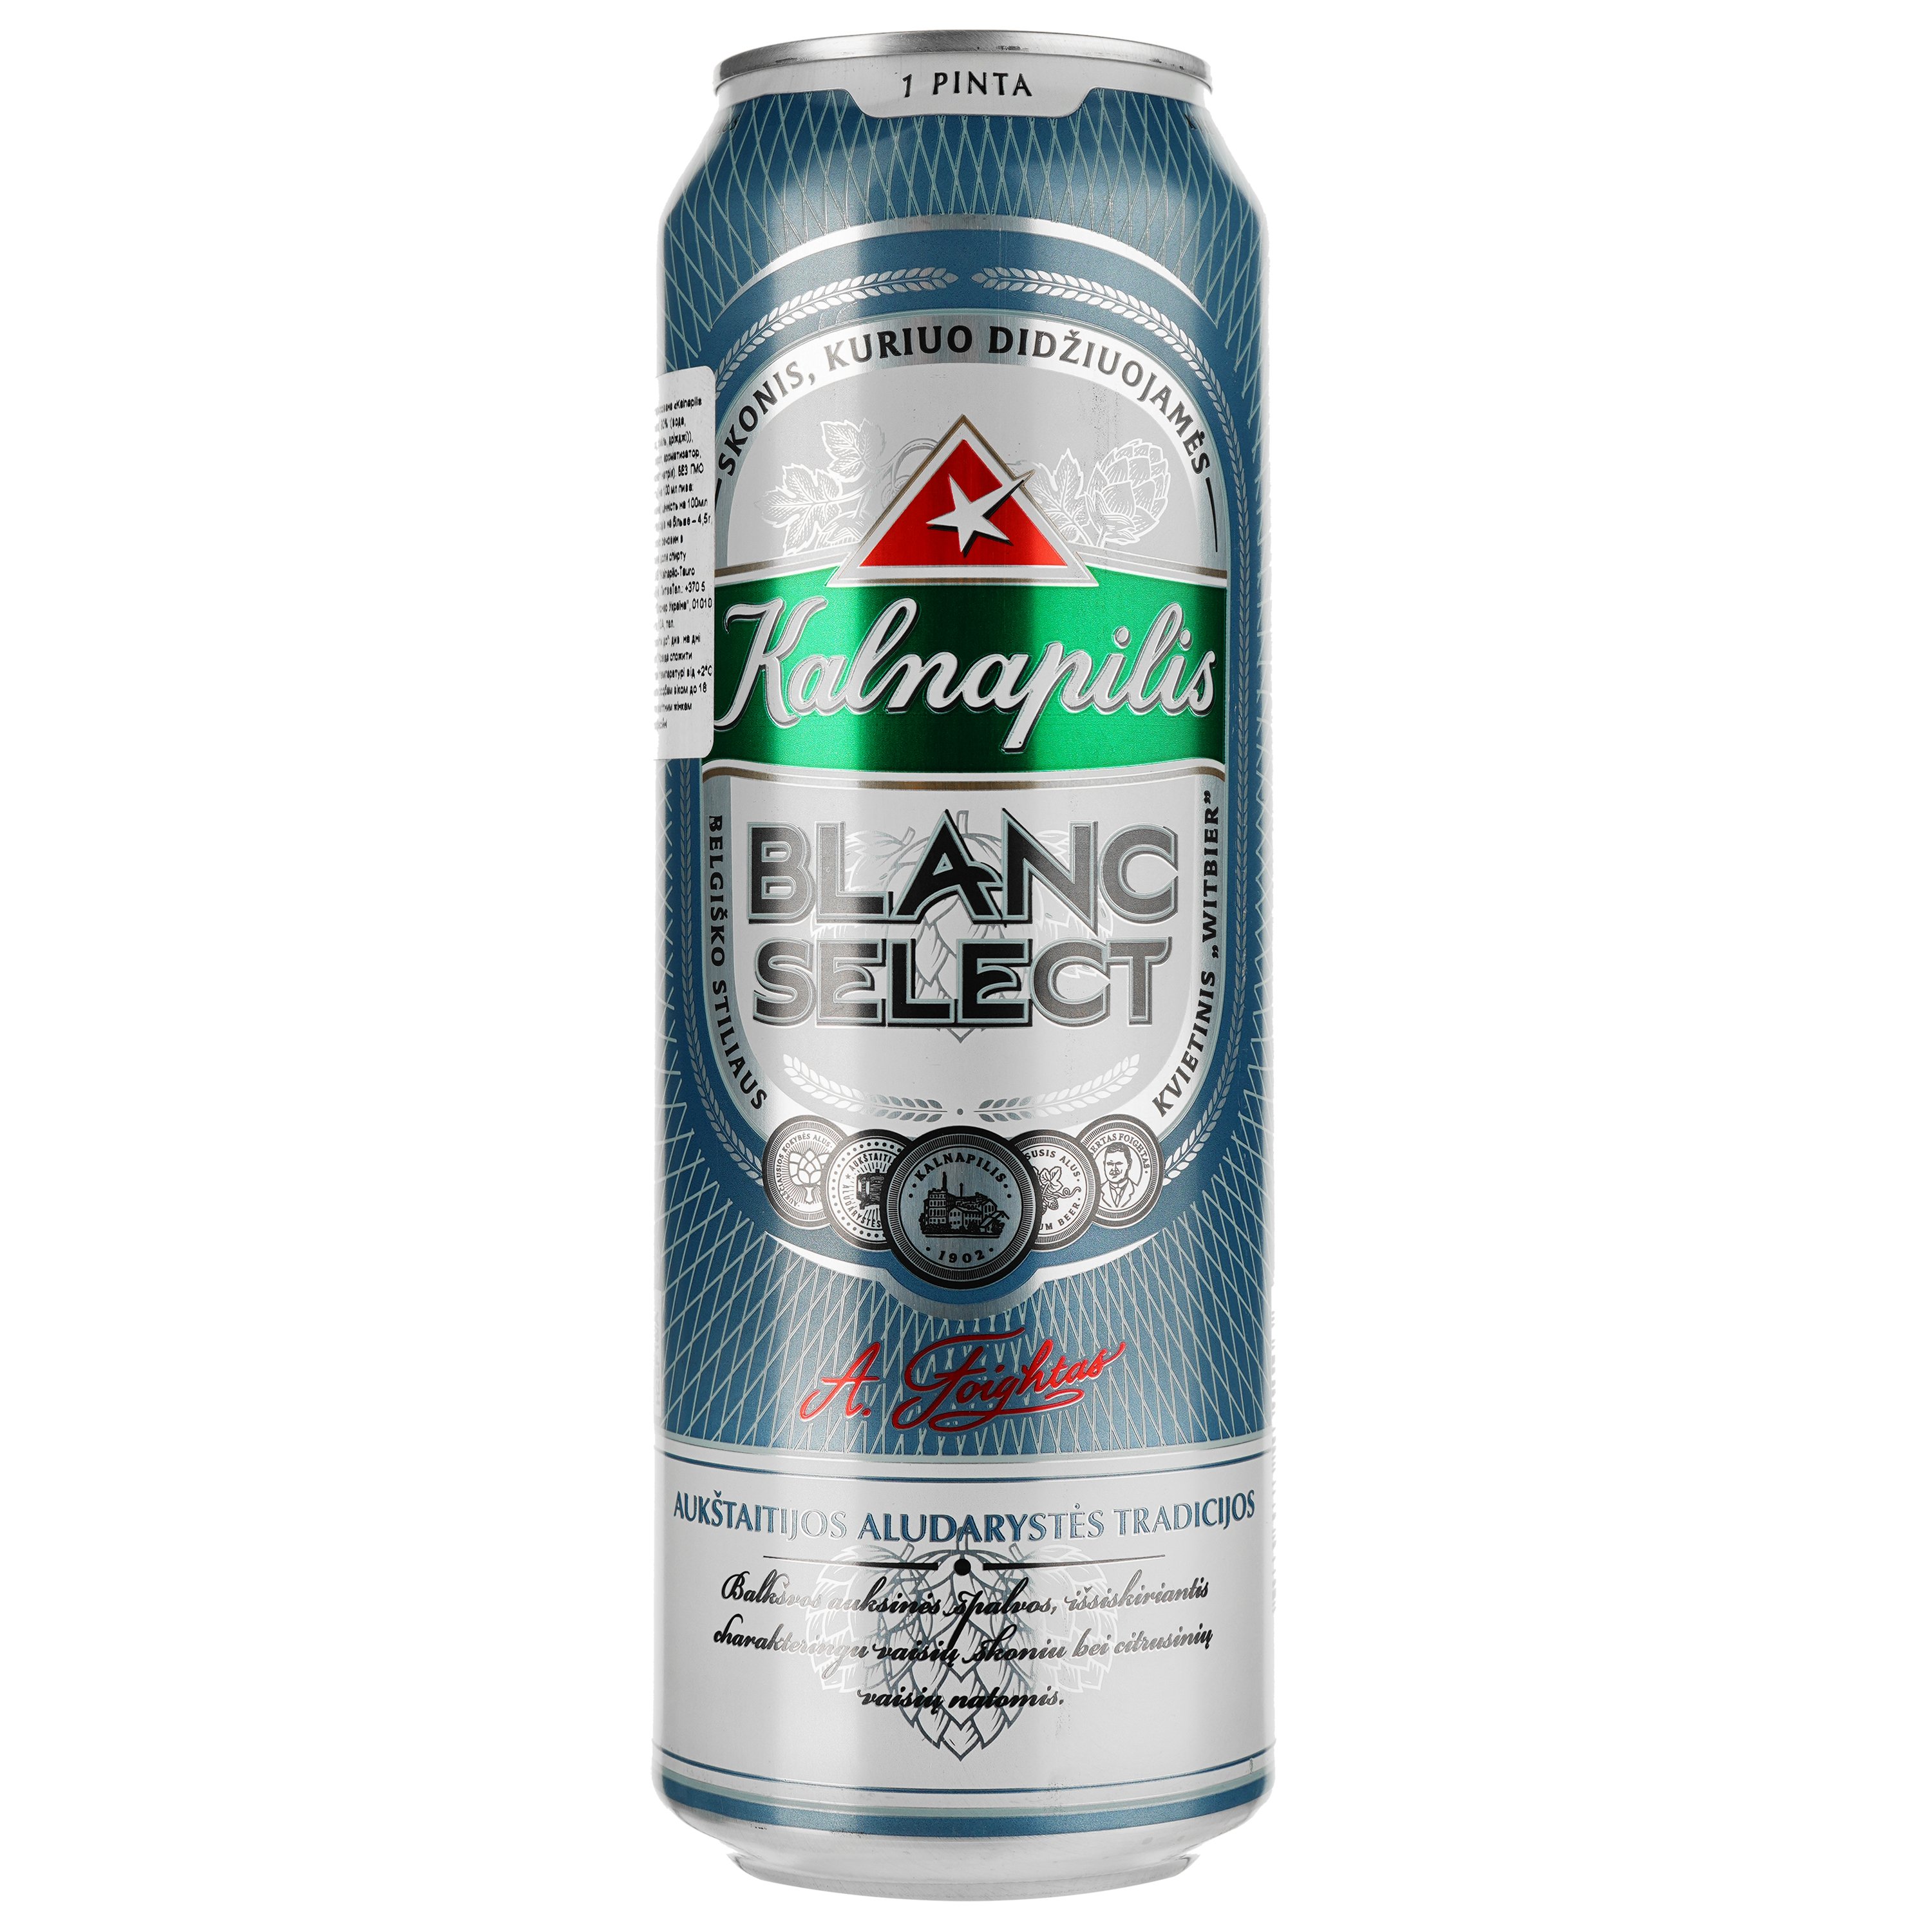 Пиво Kalnapilis Blanc Select светлое 5% 0.568 л ж/б - фото 1